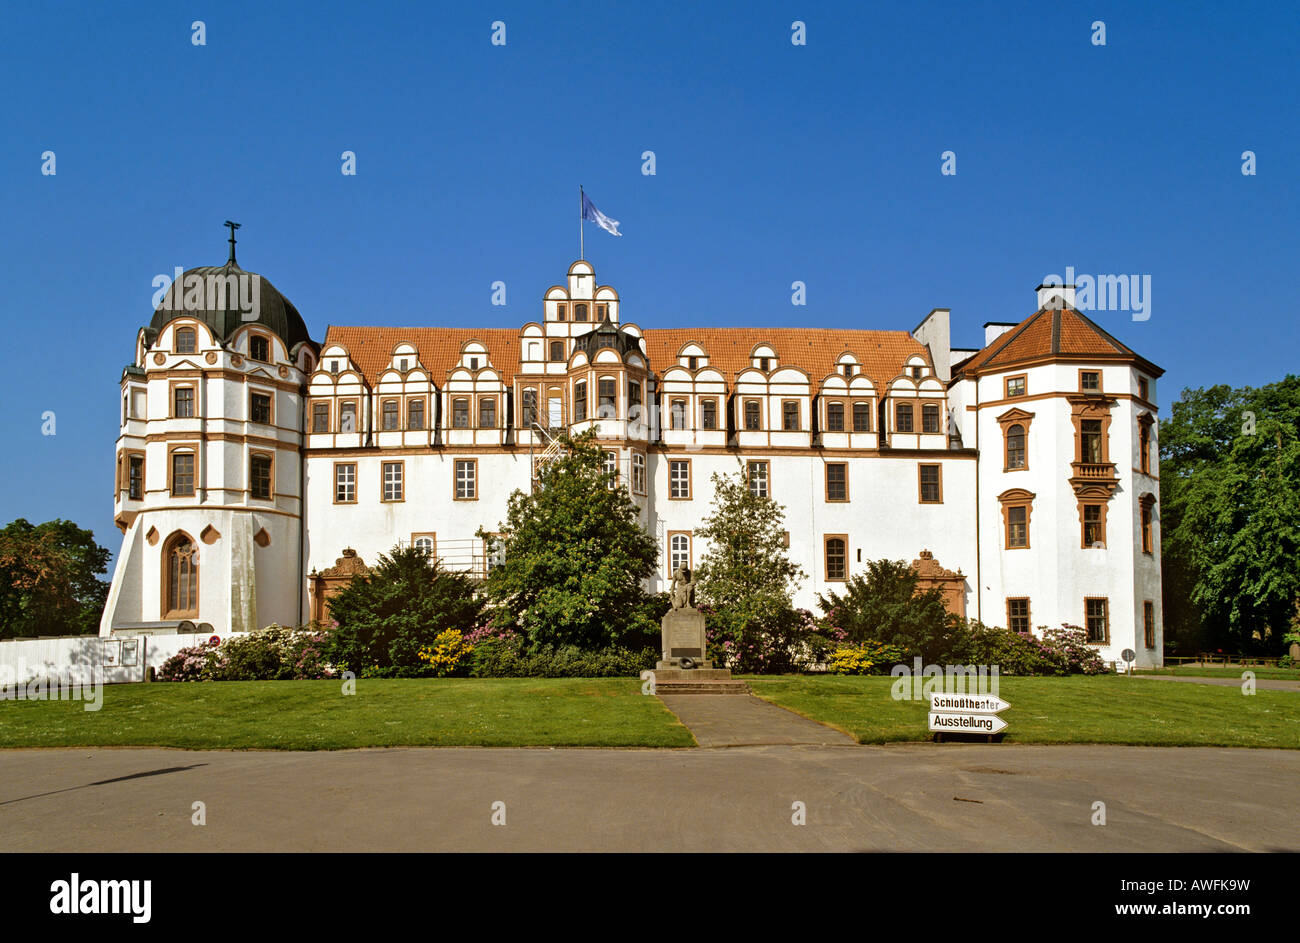 Celle di Bulgheria Palace, Celle, Bassa Sassonia, Germania, Europa Foto Stock